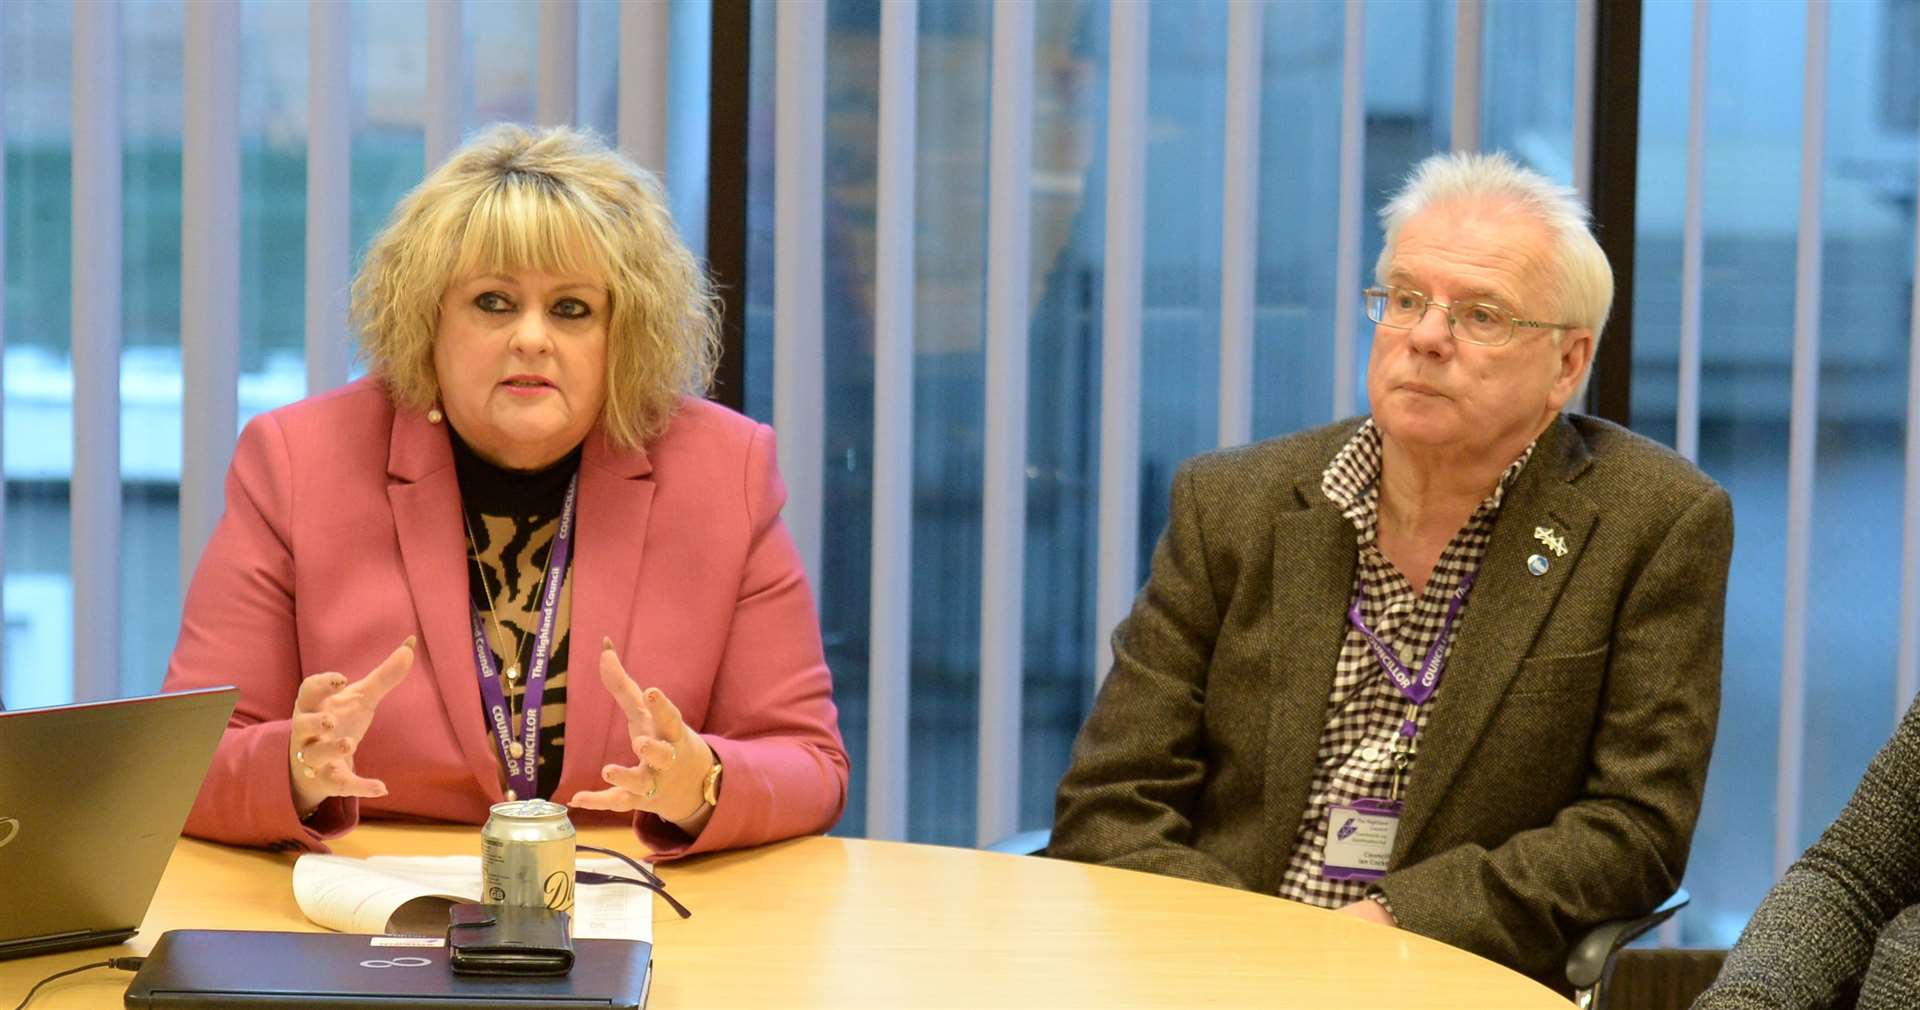 SNP co-leaders Cllr Maxine Smith and Cllr Ian Cockburn.